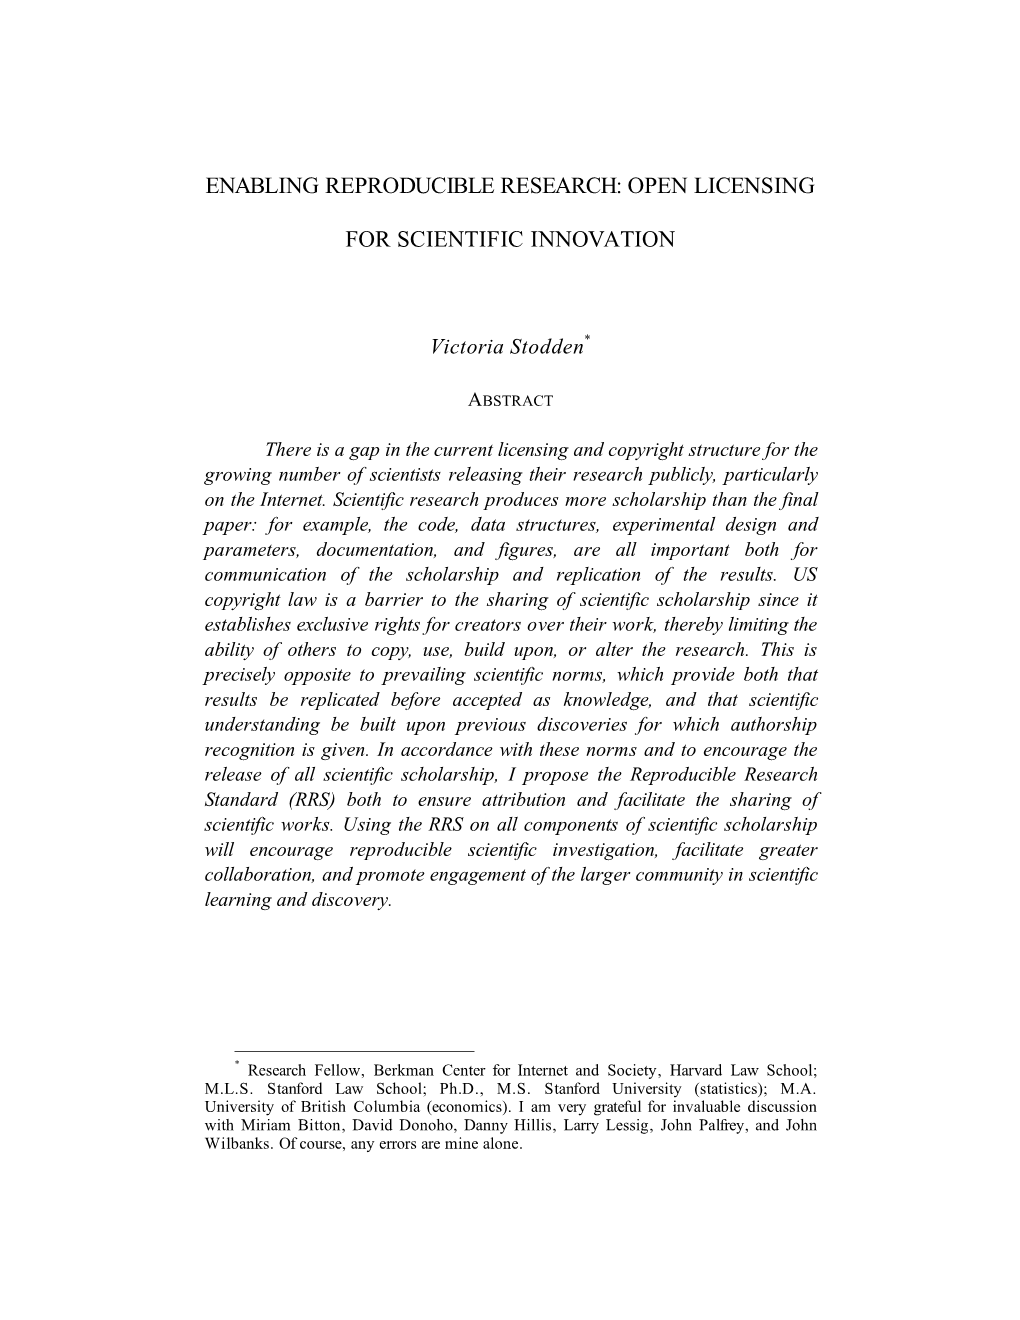 Enabling Reproducible Research: Open Licensing